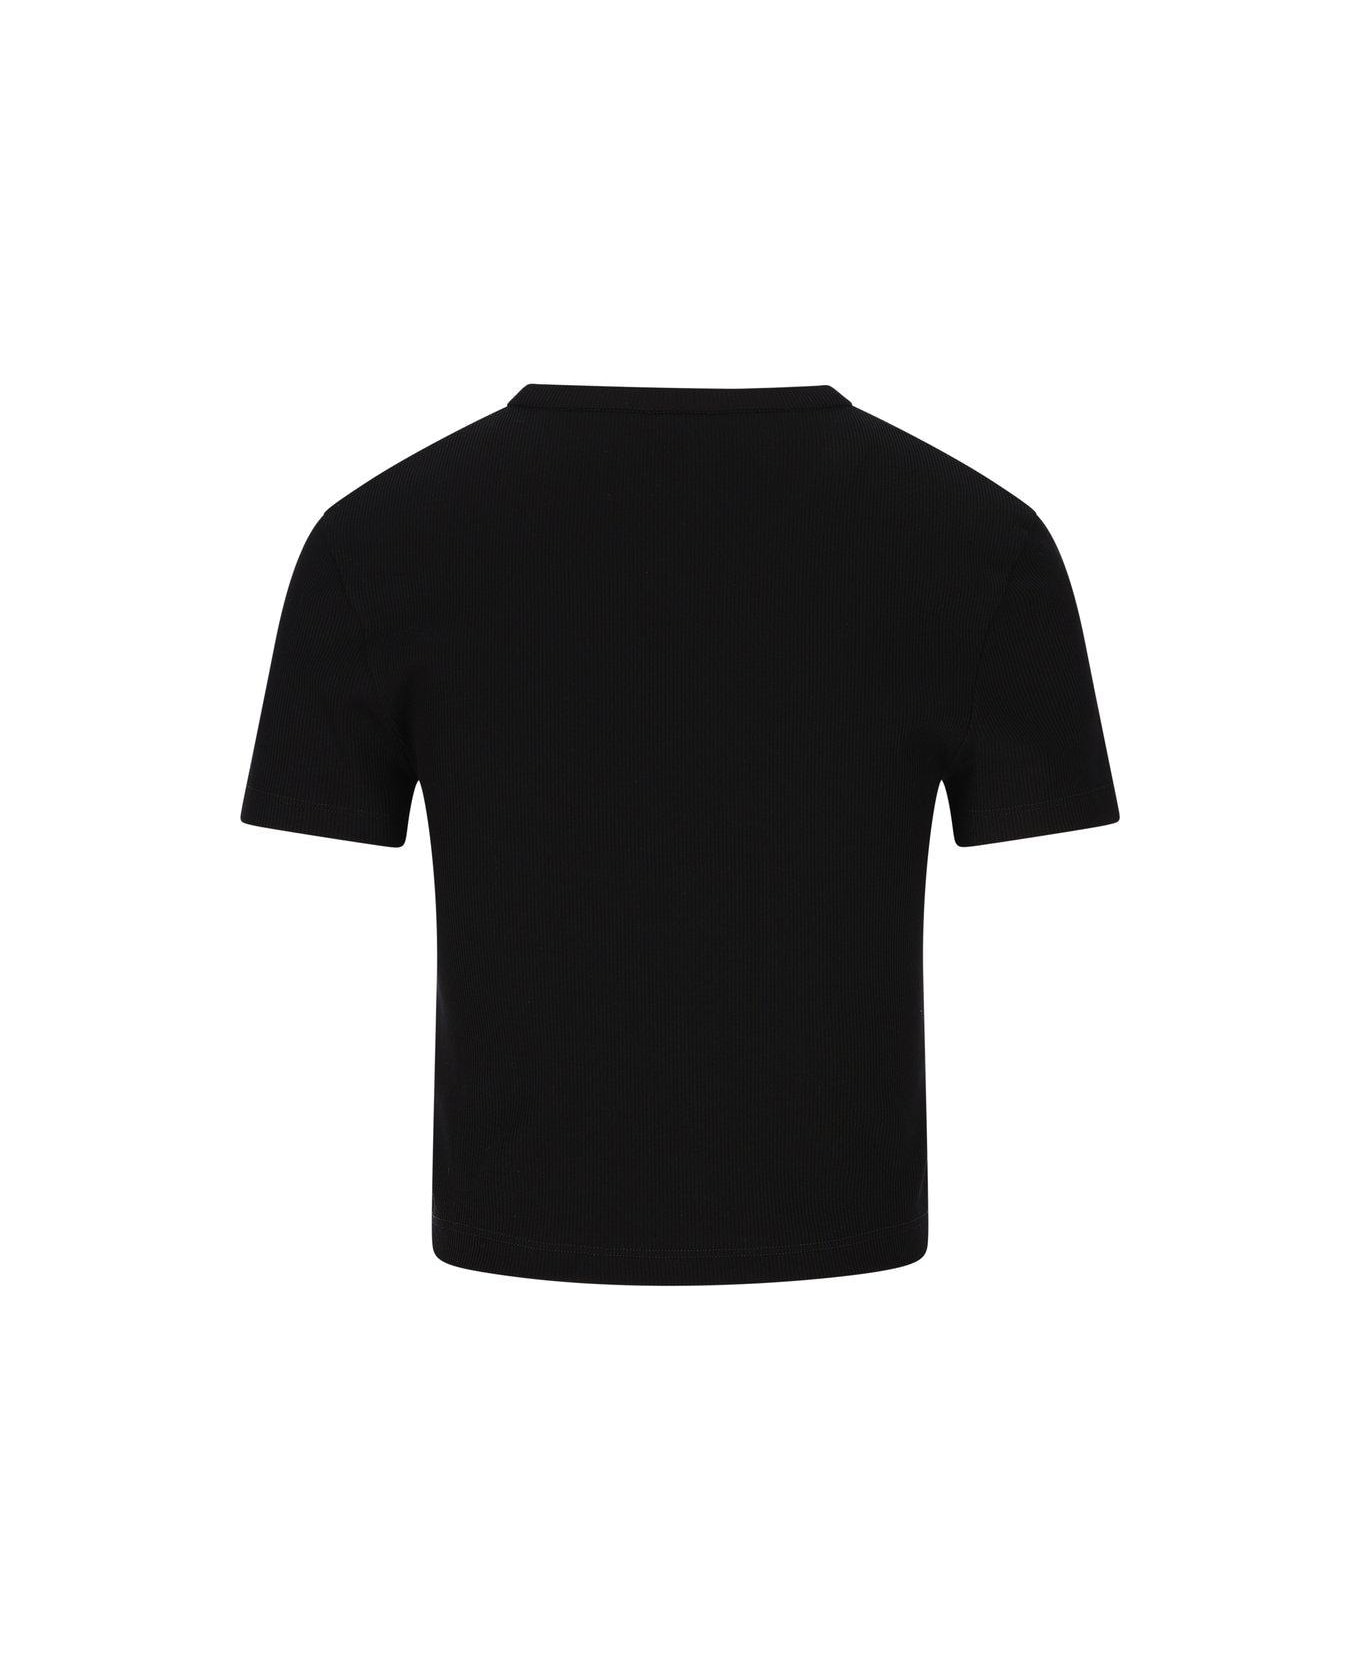 Fendi Logo Embroidered Crewneck Cropped T-shirt - Black